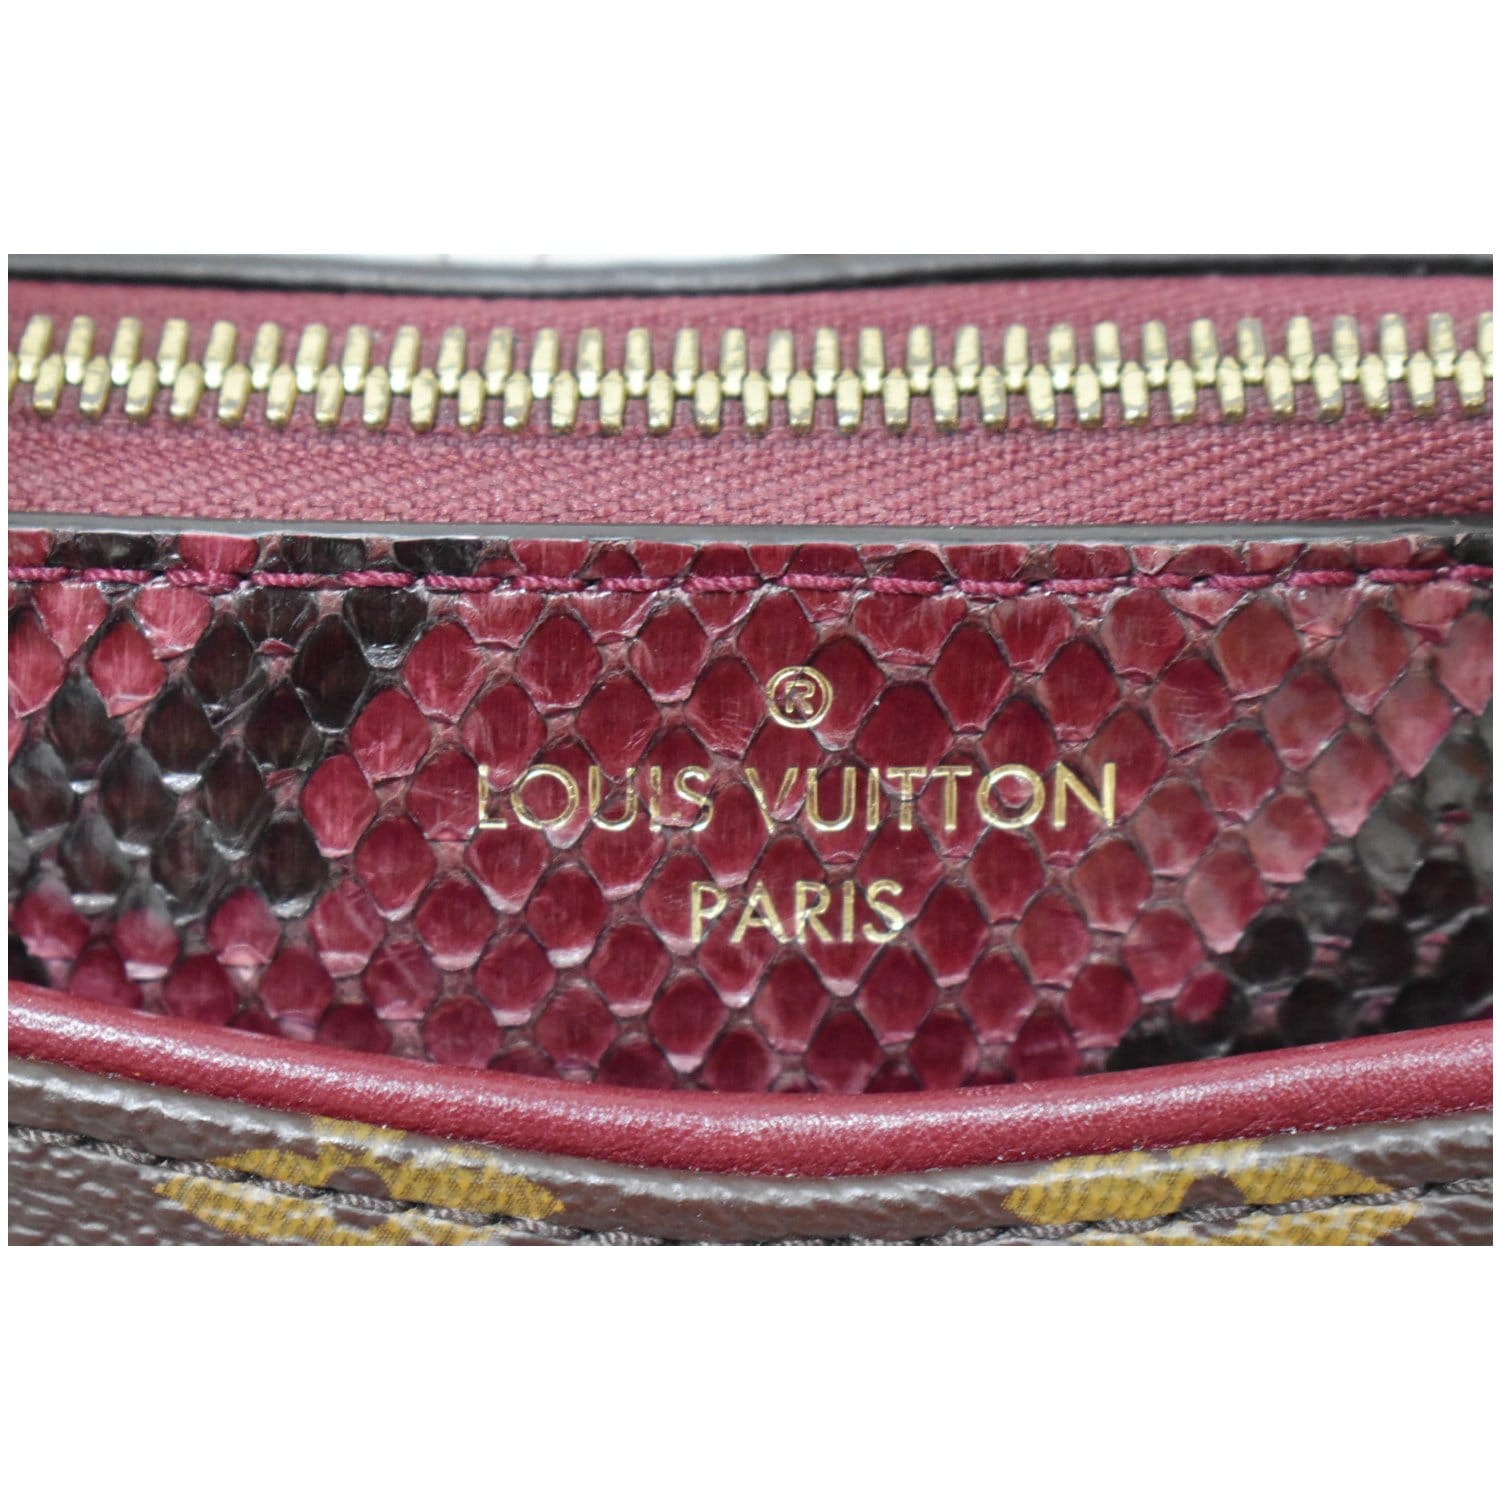 As New Louis Vuitton 'Runway' Monogrammed Lizard, Python and Fur